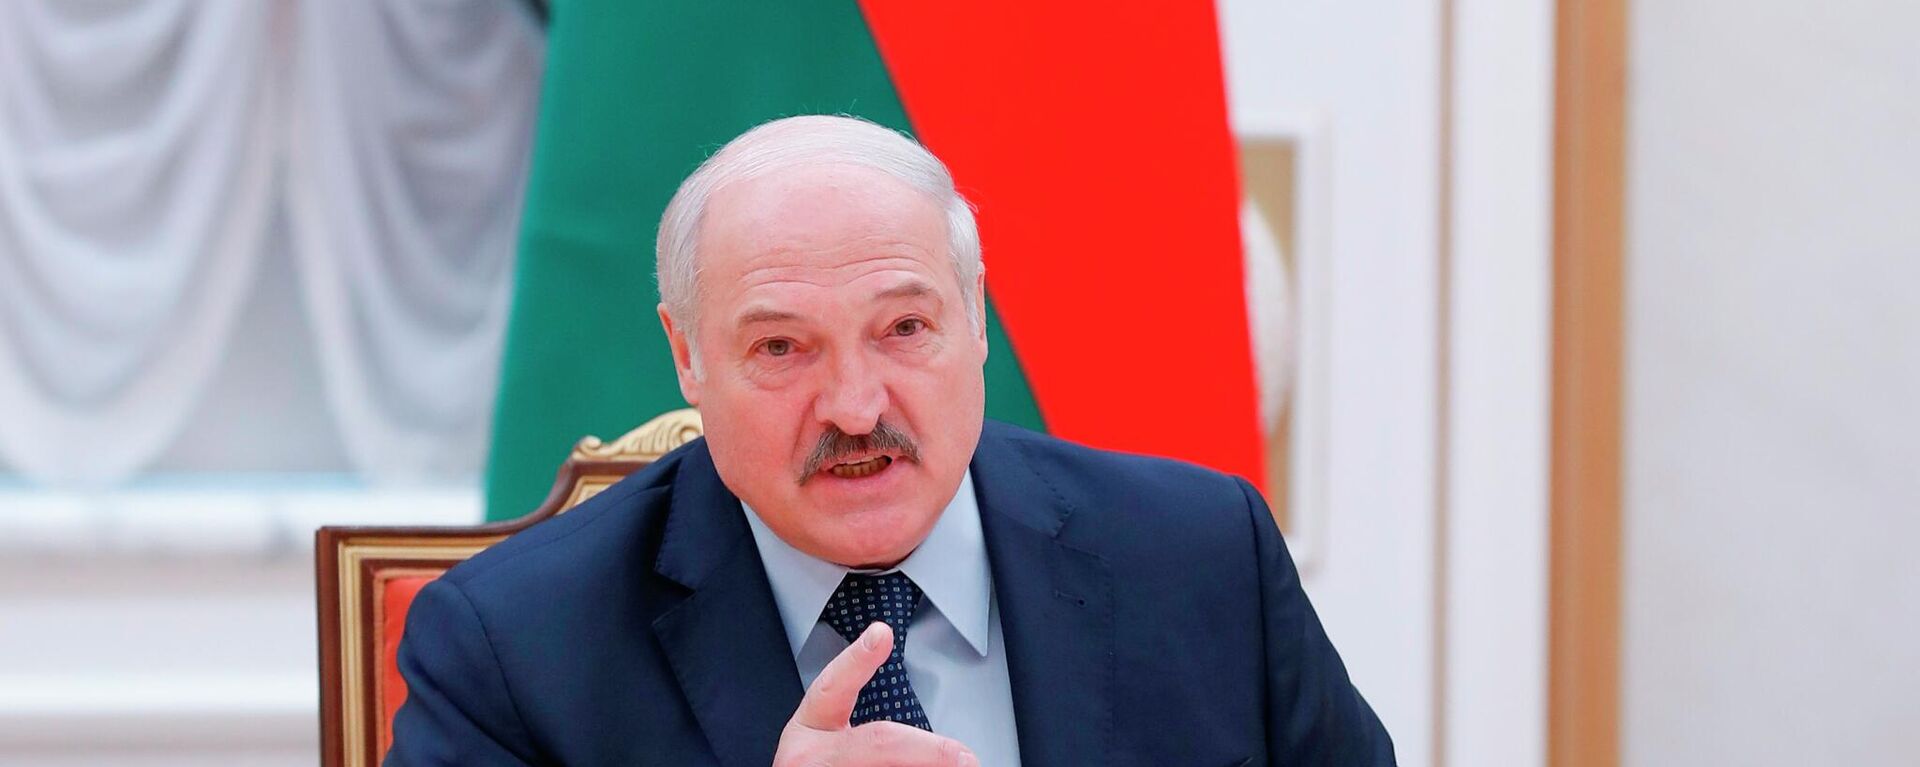 Baltarusijos prezidentas Aleksandras Lukašenka - Sputnik Lietuva, 1920, 20.07.2021